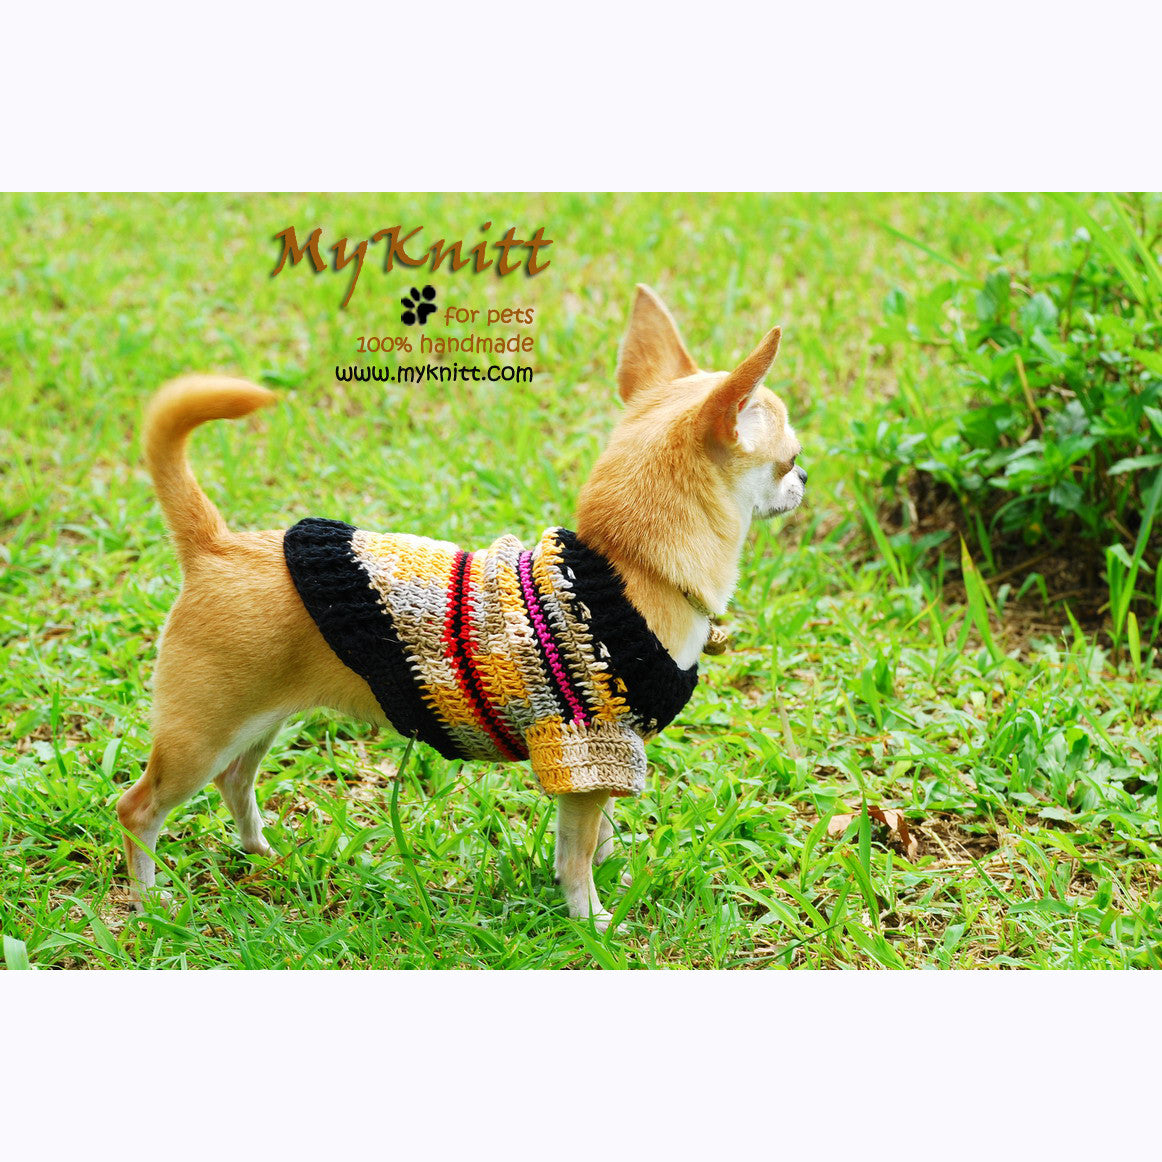 Rustic Dog Clothes Cream Lightweight Chihuahua Clothing DK826 by Myknitt